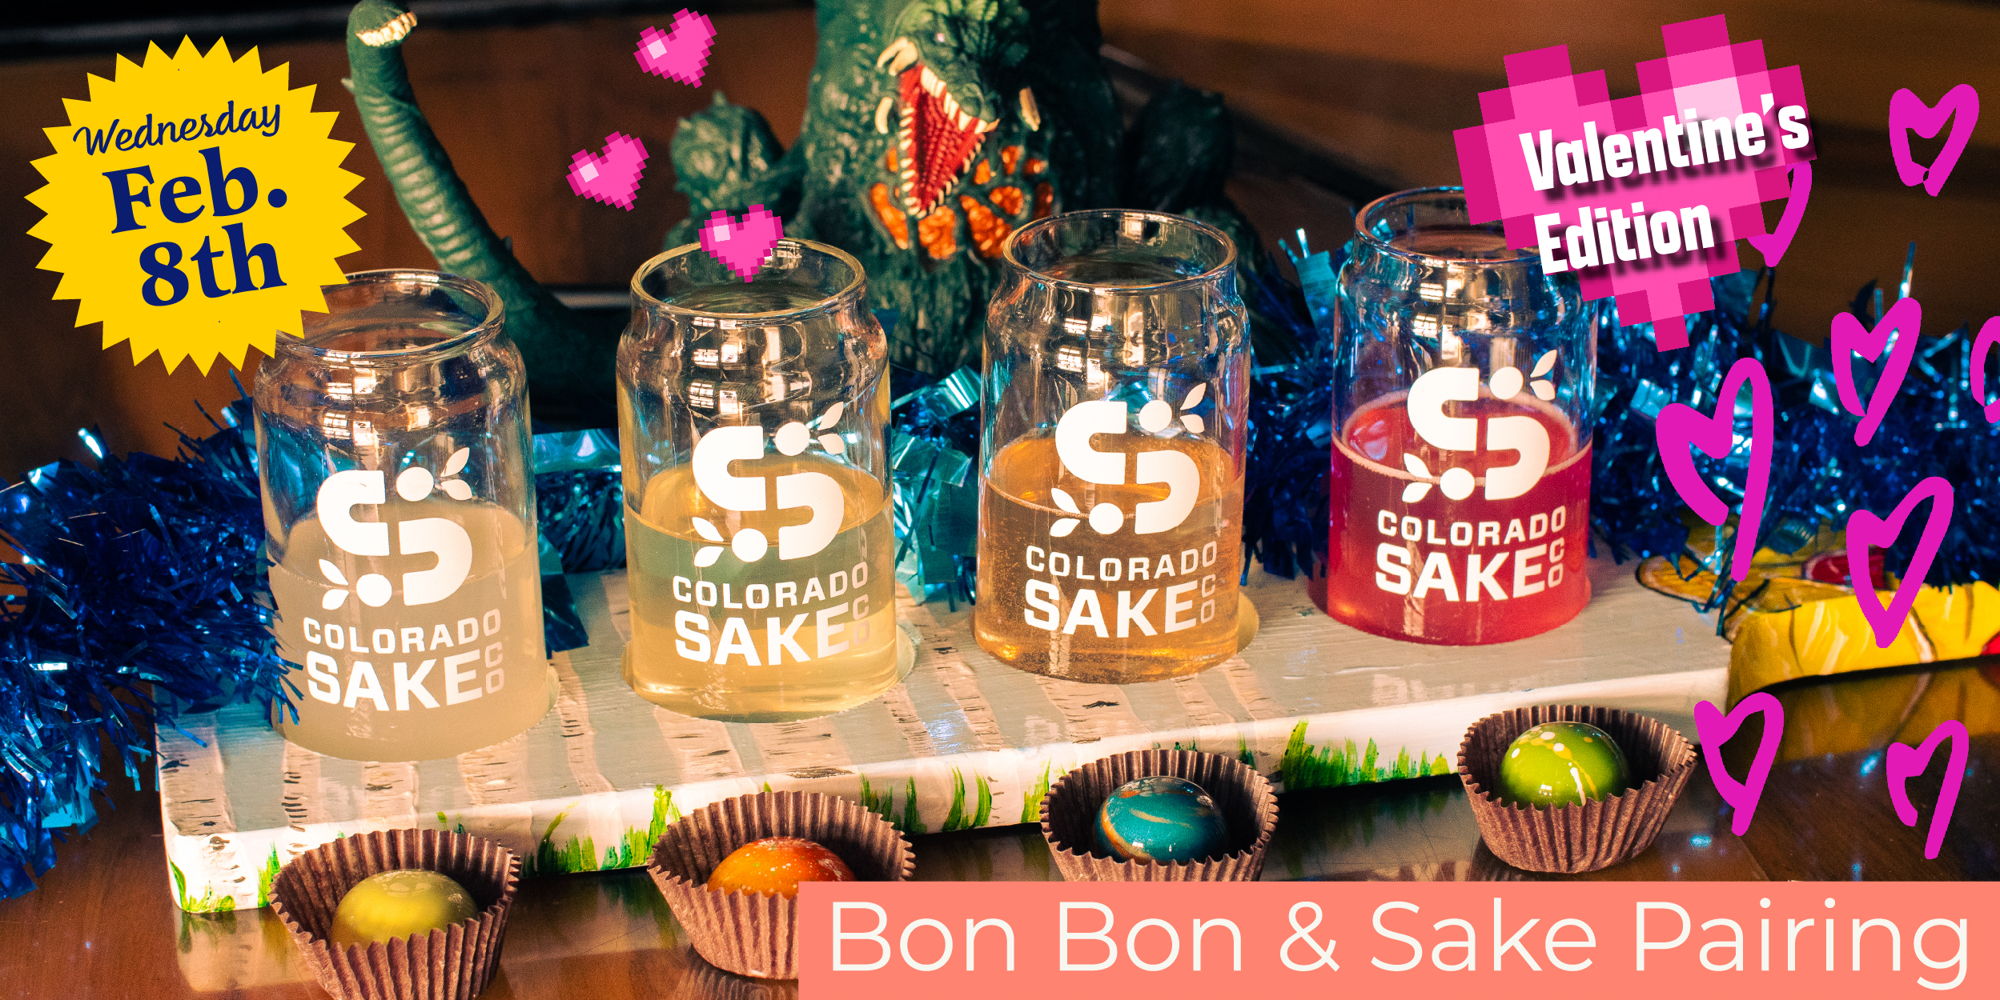 Valentine's Bon Bon & Sake Pairing promotional image